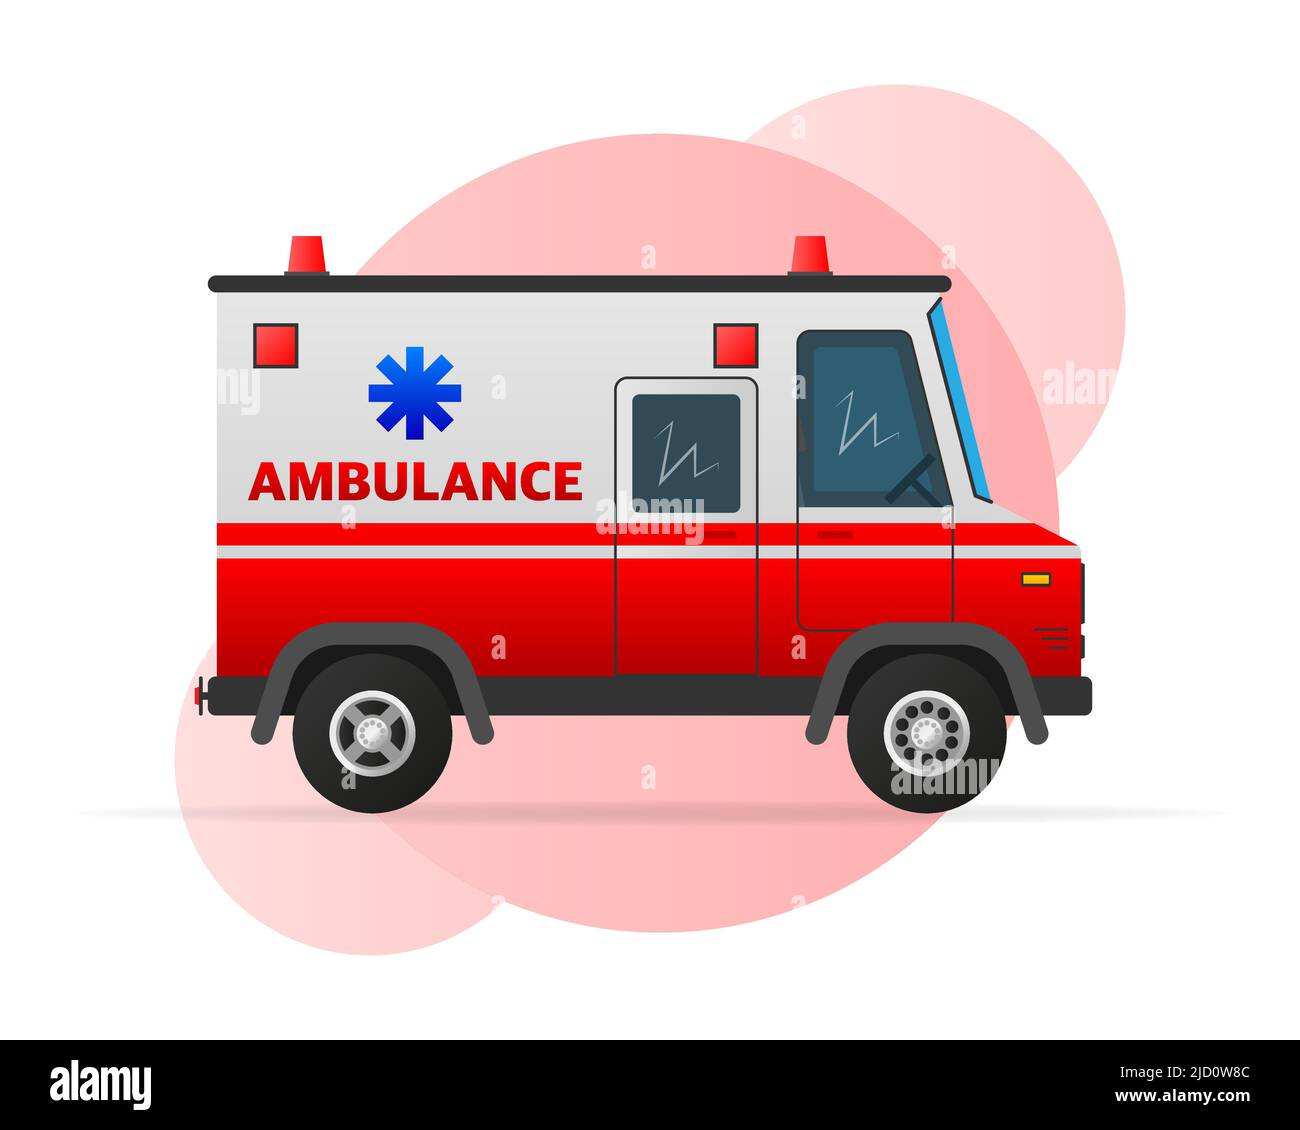 Ambulance emergency vehicle cartoon Cut Out Stock Images